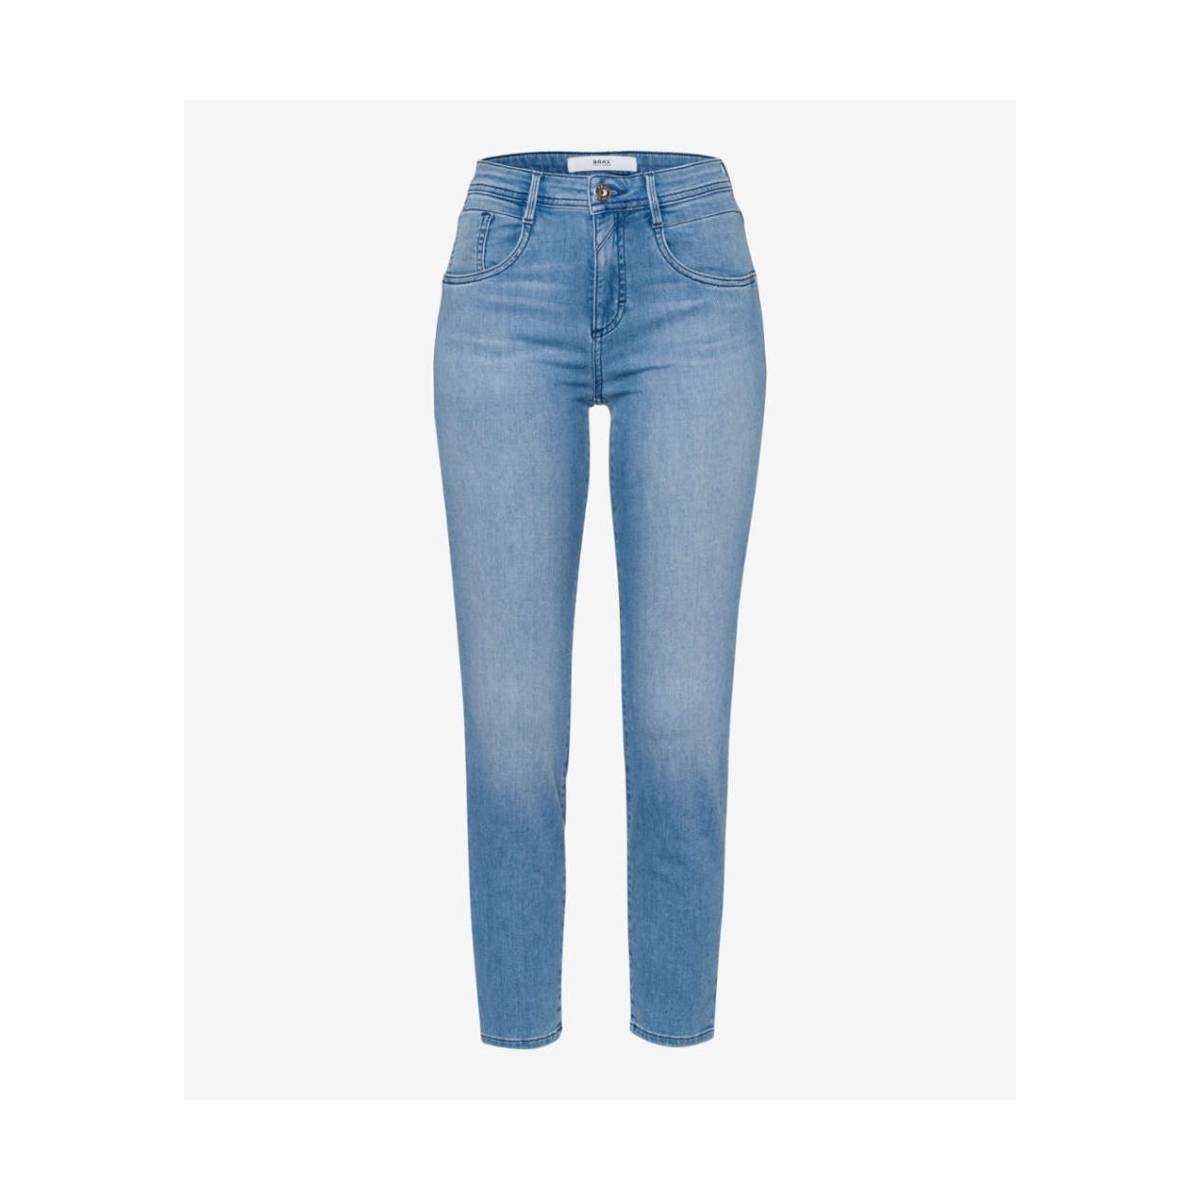 BRAX  broeken lichte jeans -  model 71-7958 09930320 - Dameskleding broeken jeans